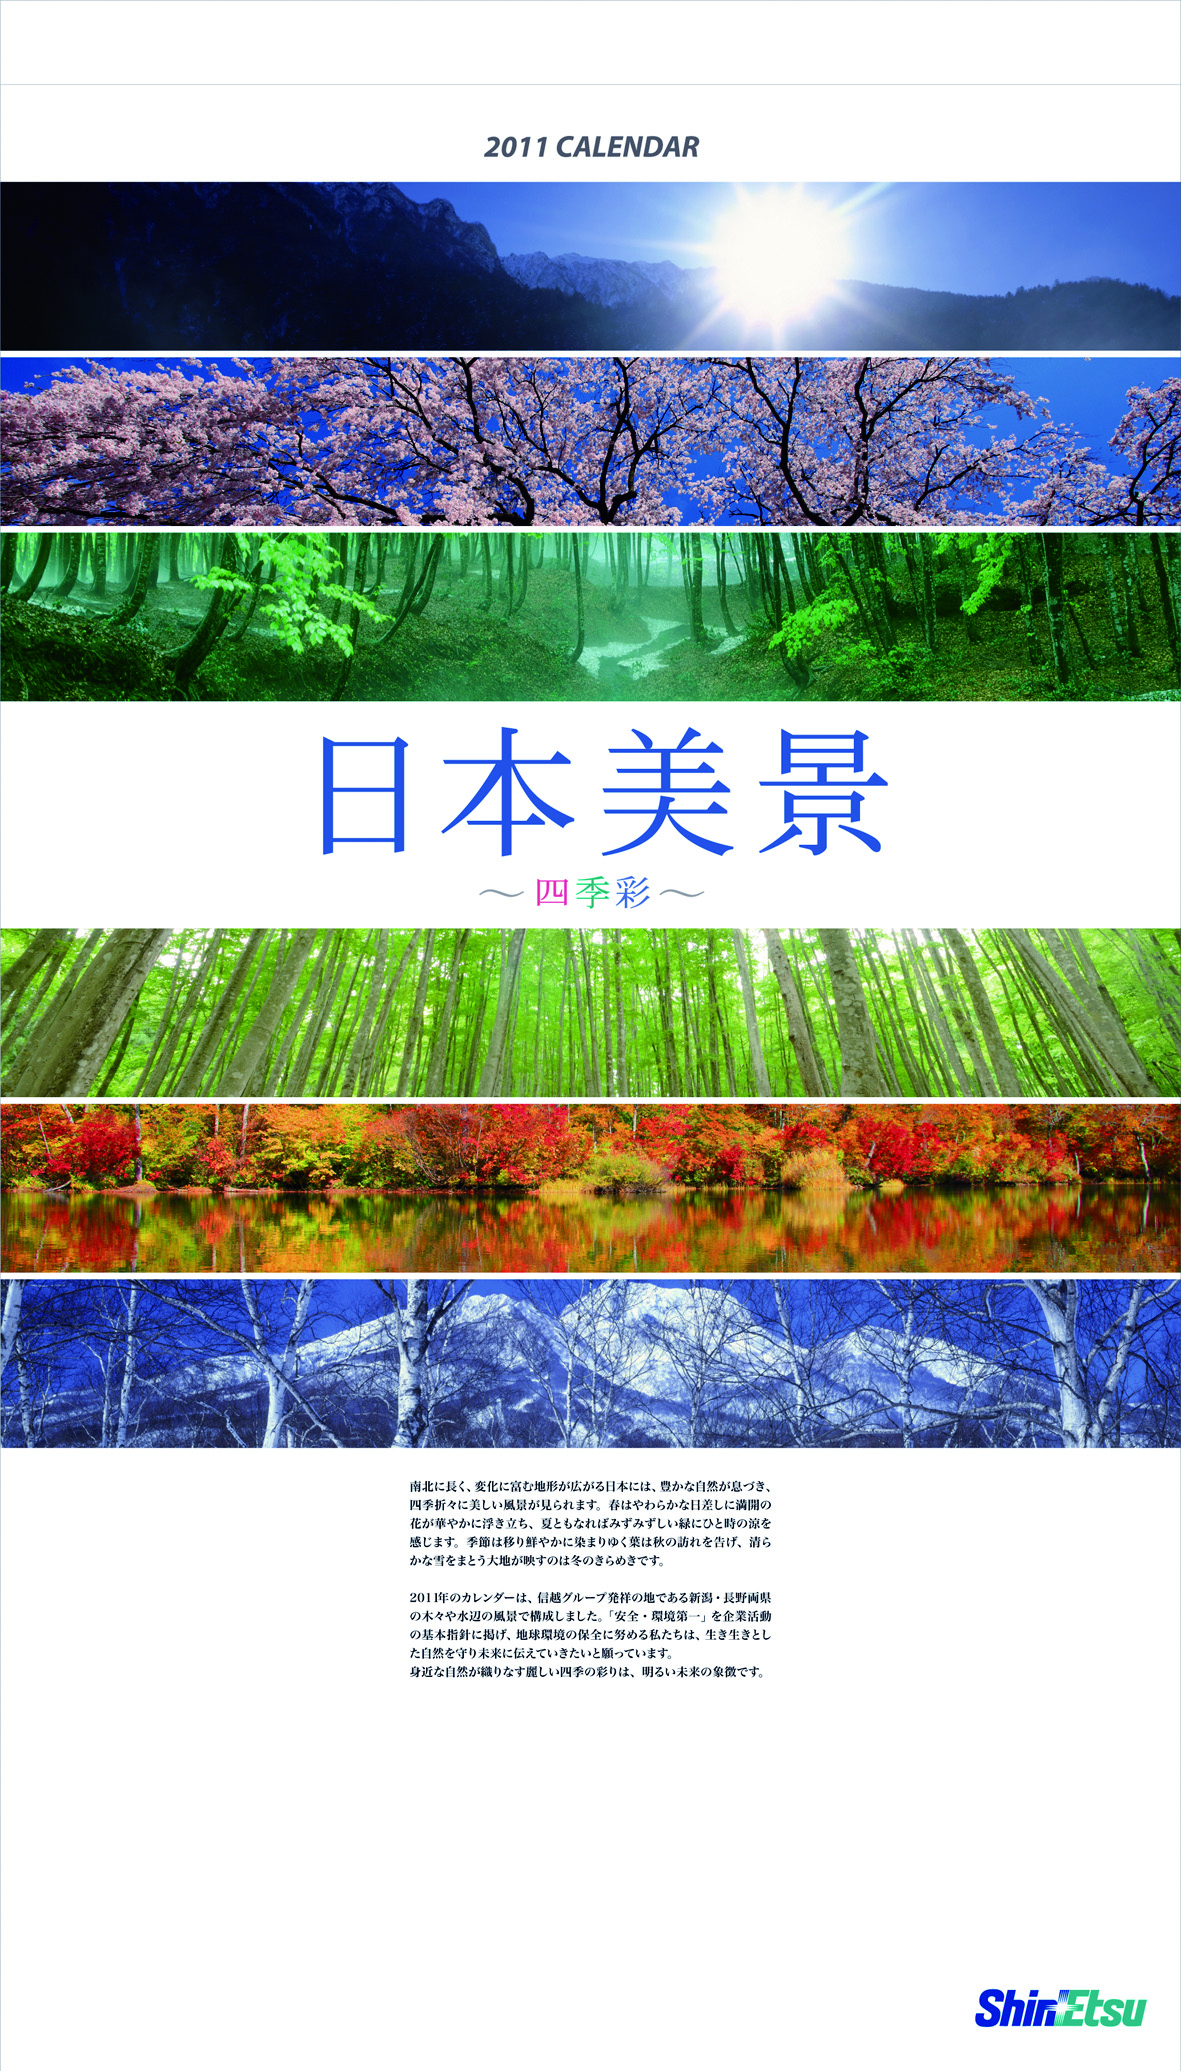 Etsu Spring 2022 Calendar Colors Of The Seasons: The Natural Beauty Of Japan | Shin-Etsu Group  Original Calendar | Shin-Etsu Chemical Co., Ltd.